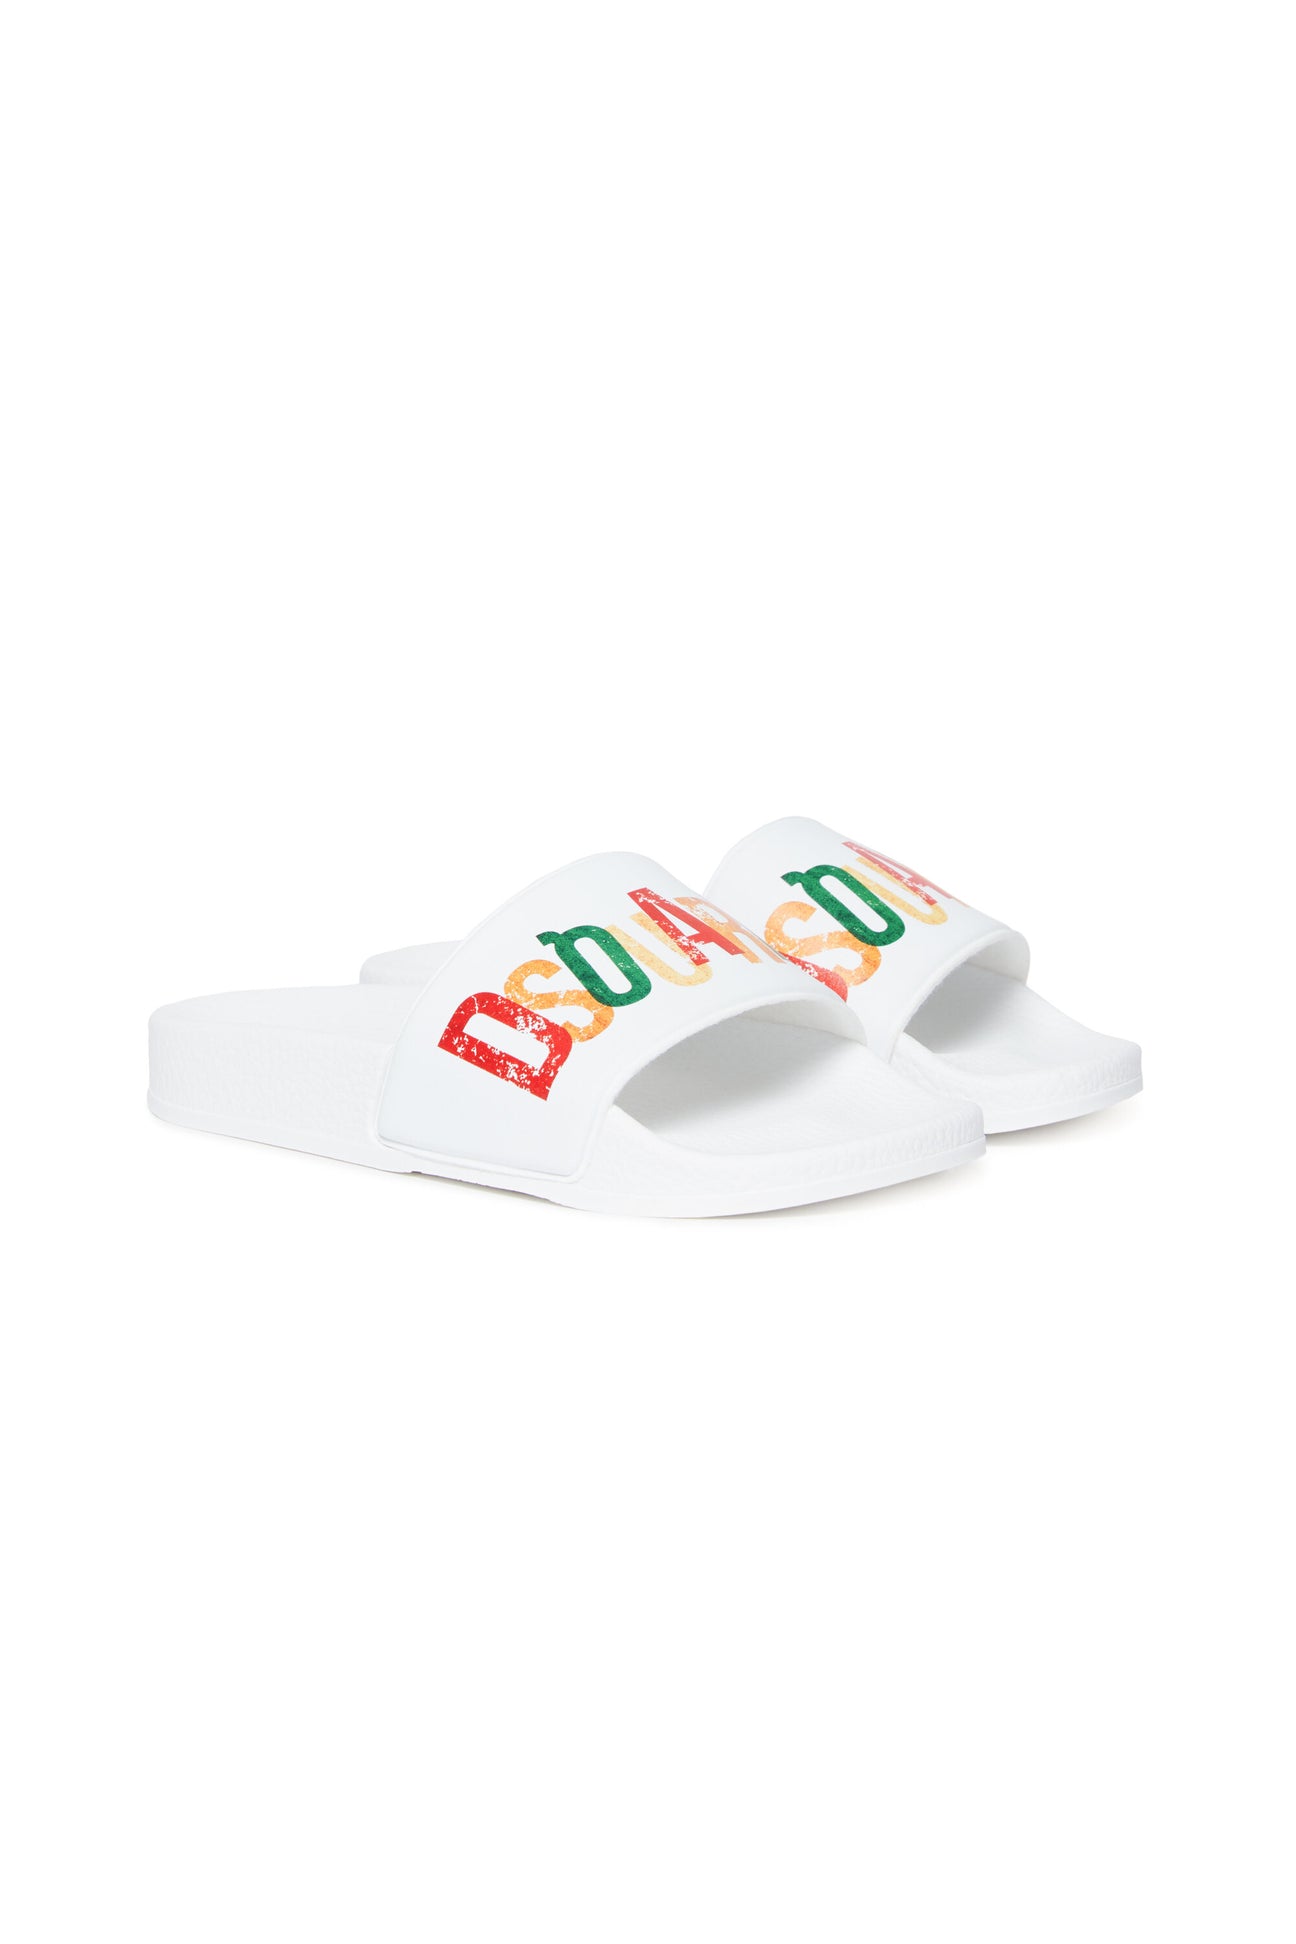 Multicolor branded slide slippers Multicolor branded slide slippers